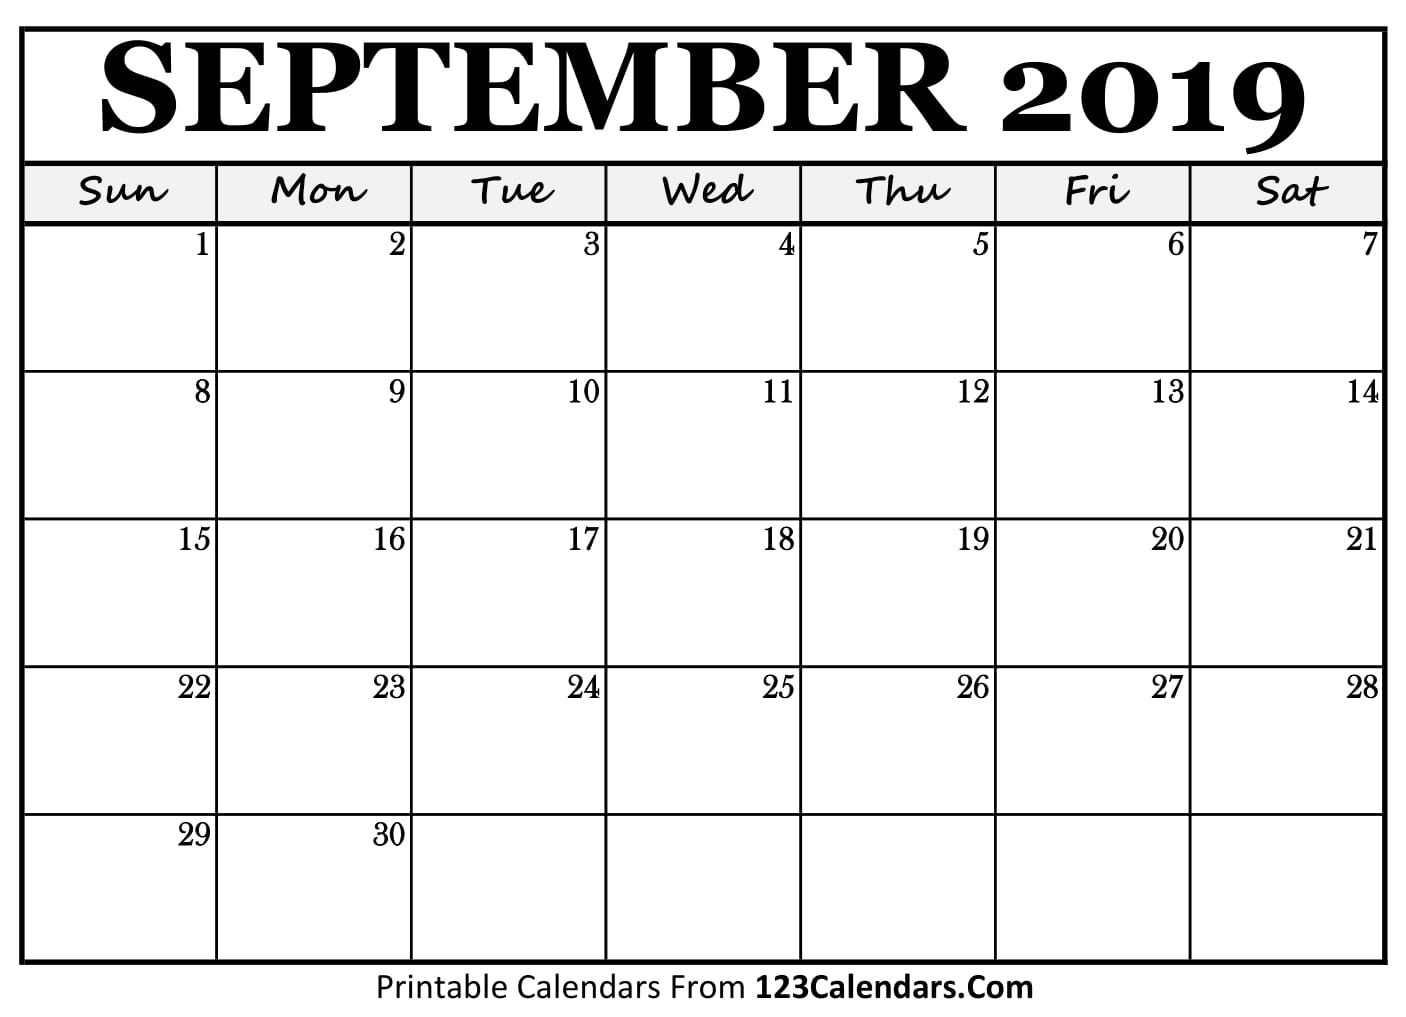 September 2019 Printable Calendar | 123Calendars